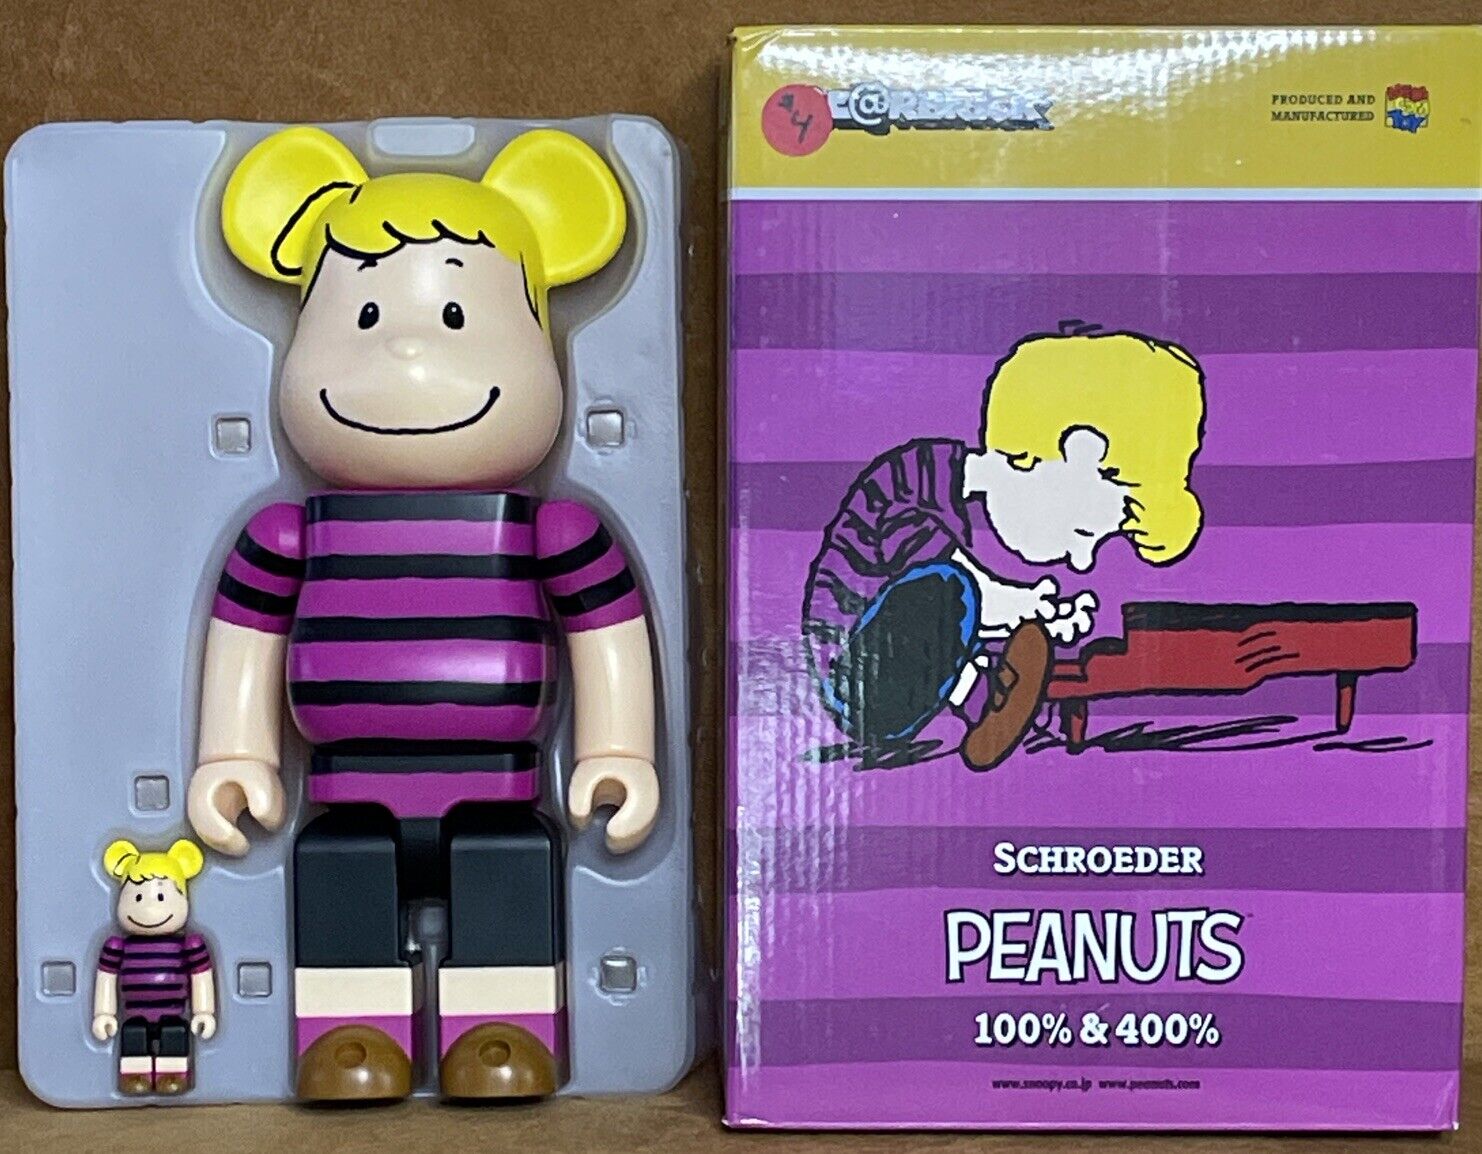 Peanuts Schroeder 100% & 400% Bearbrick Set by Medicom Toy